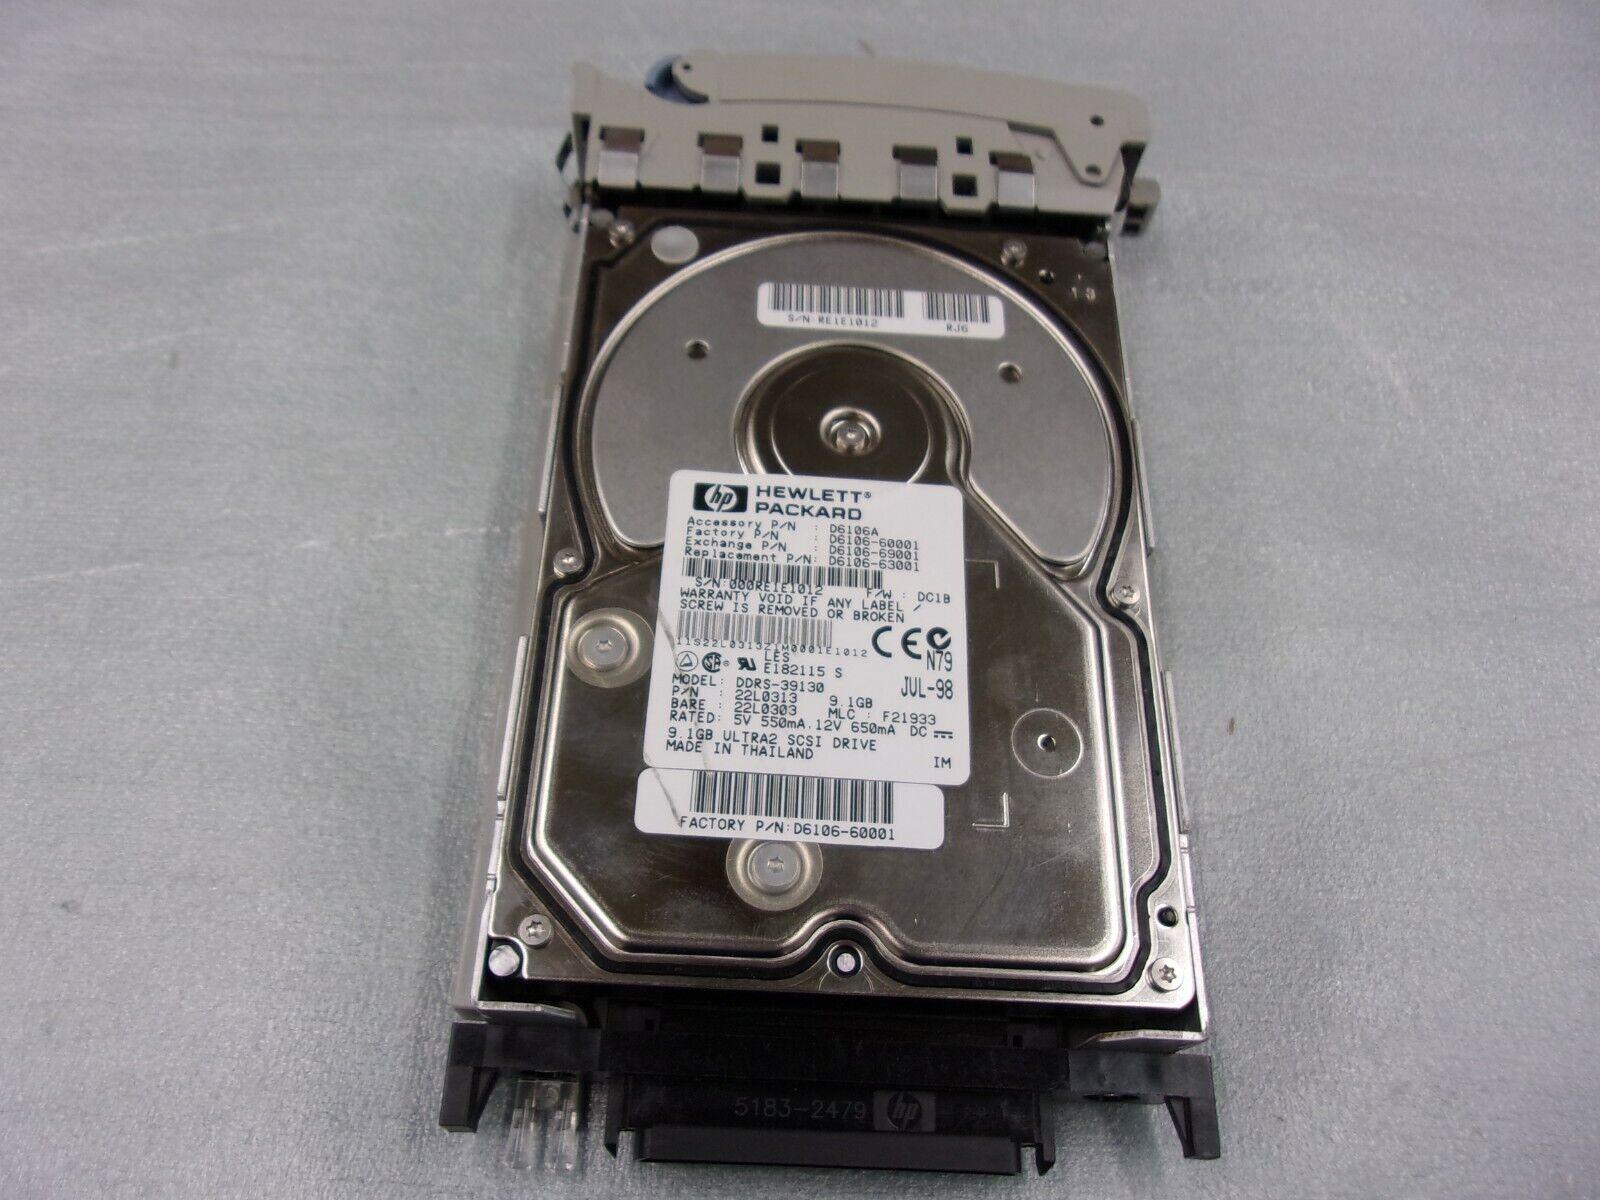 DDRS-39130 IBM 9.1GB ULTRAWIDE SCSI HDD IBM 7200RPM  